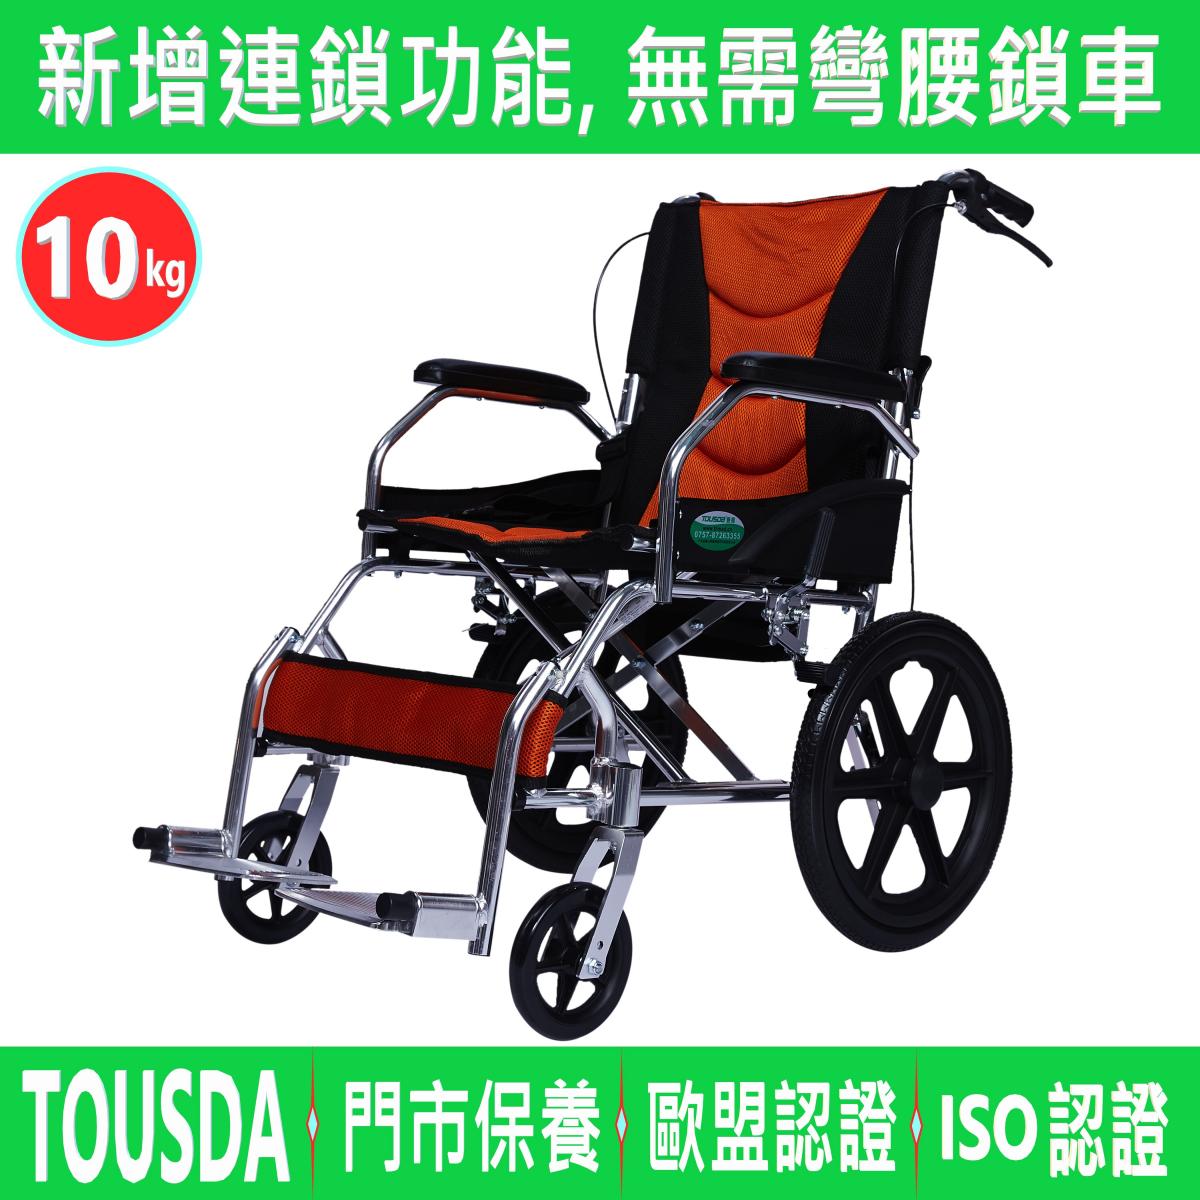 TOUSDA - Lightweight Aluminum Alloy Wheelchair